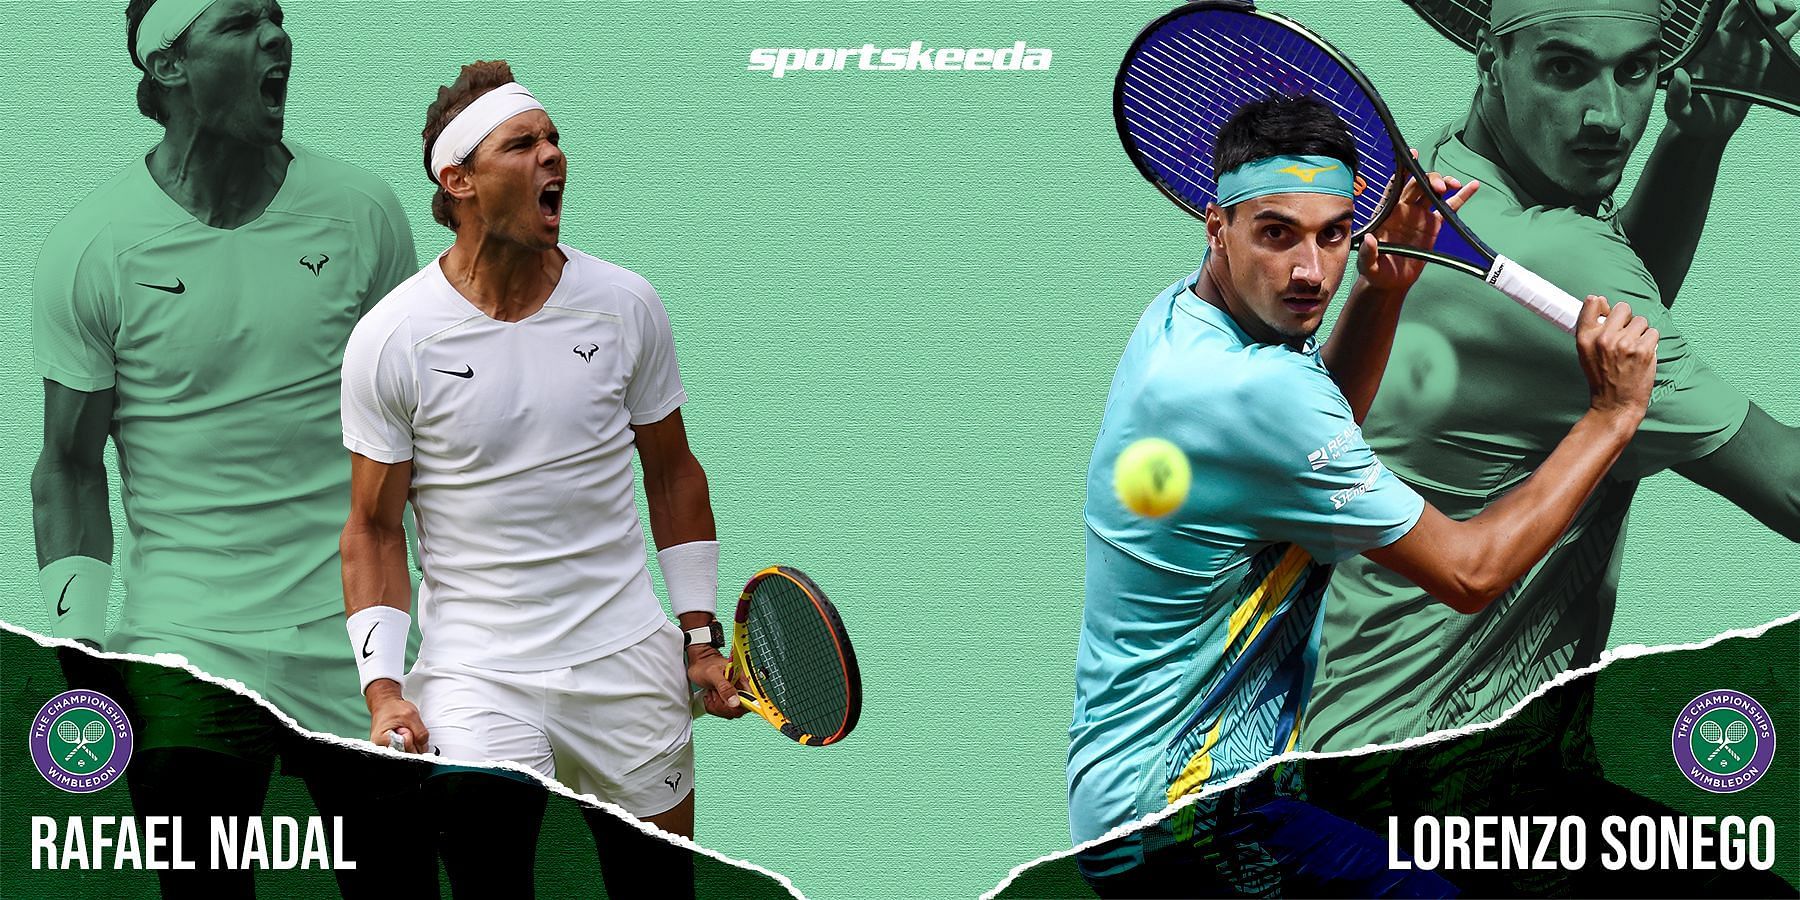 Wimbledon 2022 Rafael Nadal vs Lorenzo Sonego preview, head-to-head, prediction, odds and pick